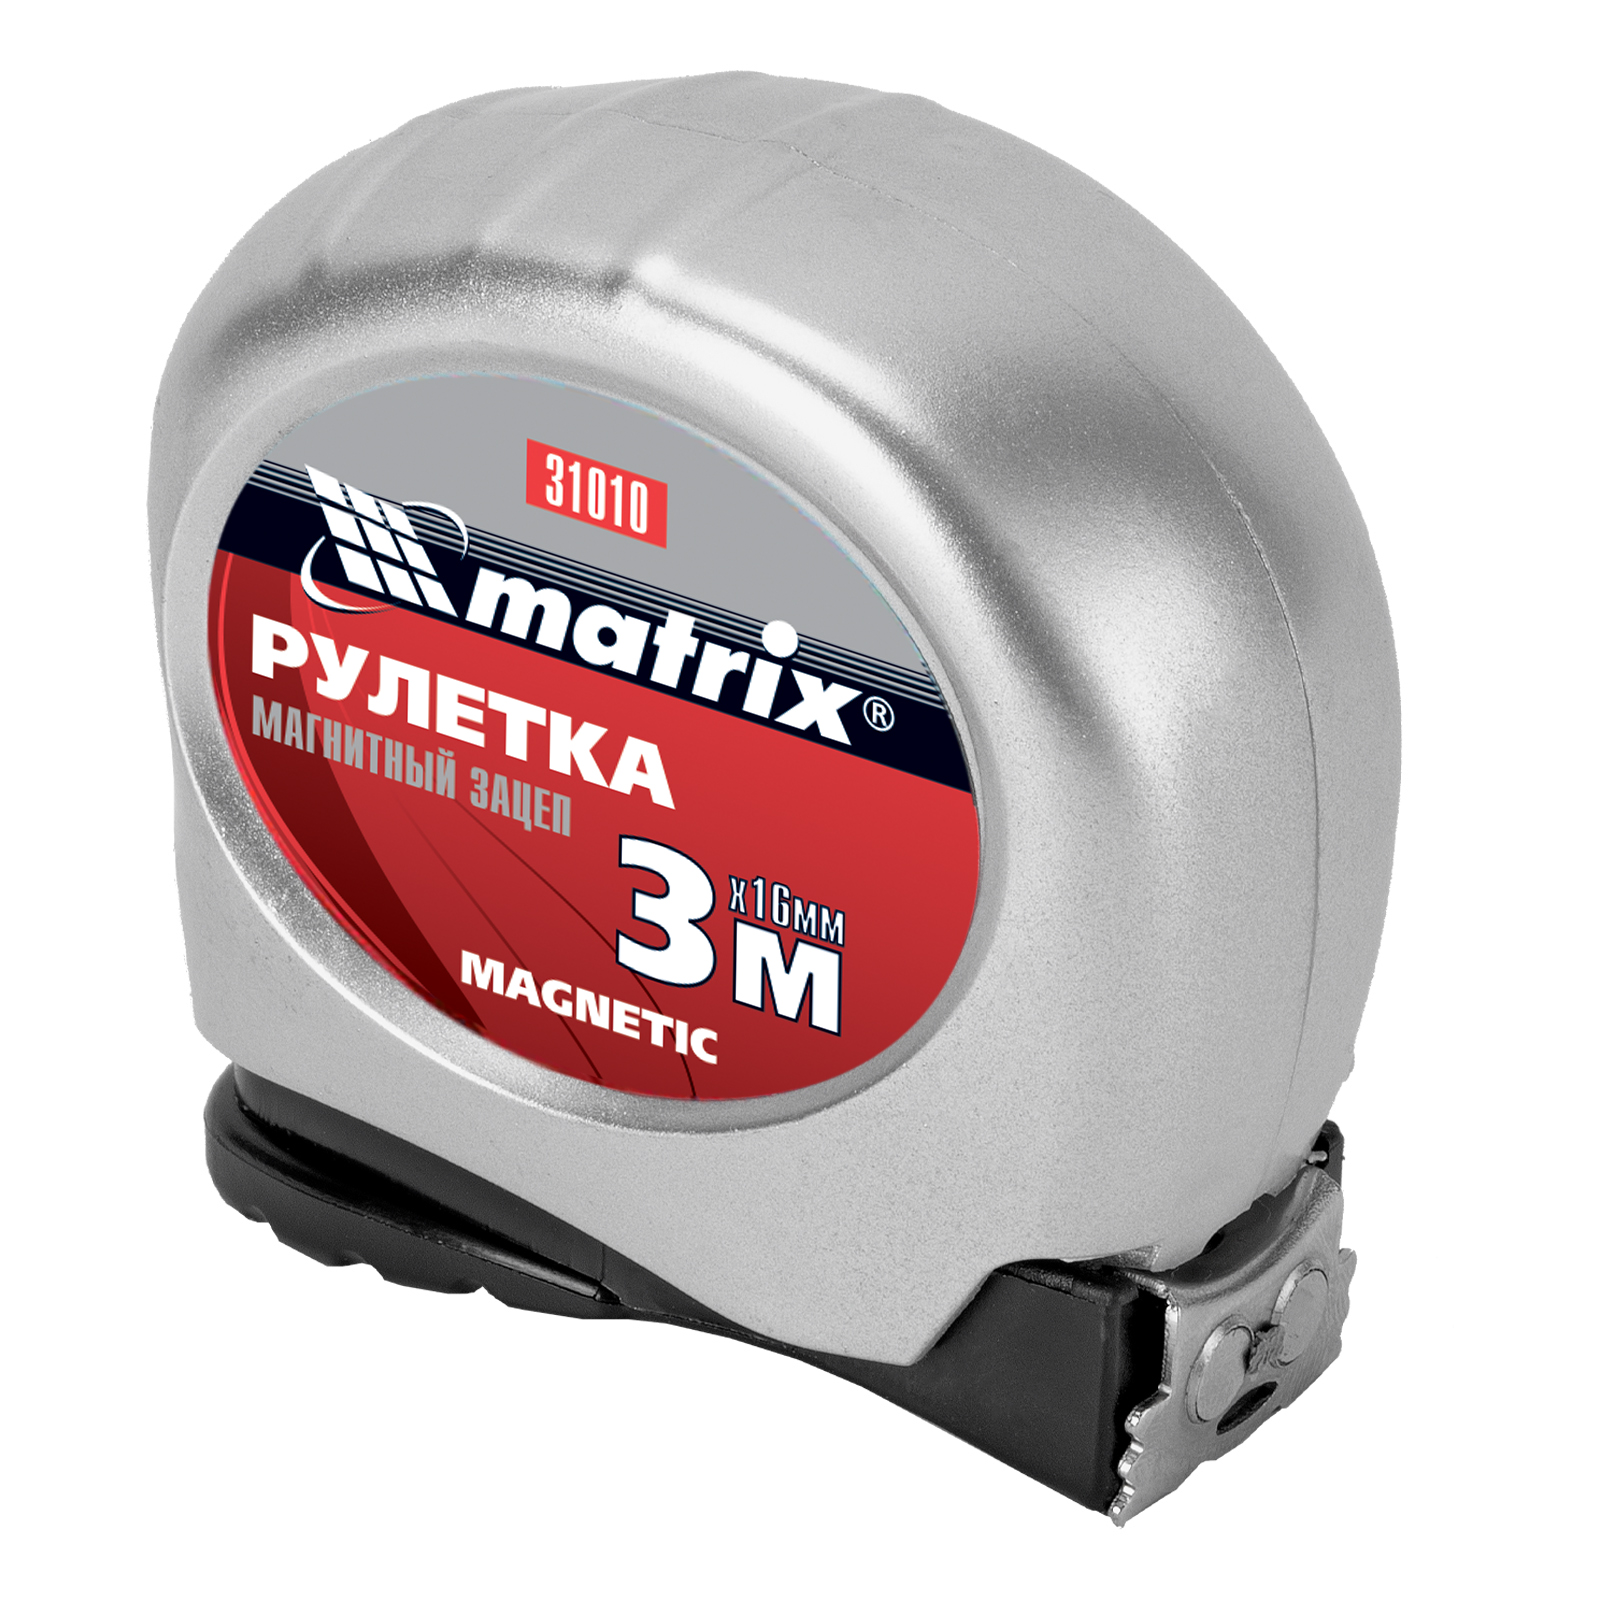 Рулетка MATRIX Magnetic 3мх16мм 31010 рулетка matrix magnetic 3мх16мм 31010